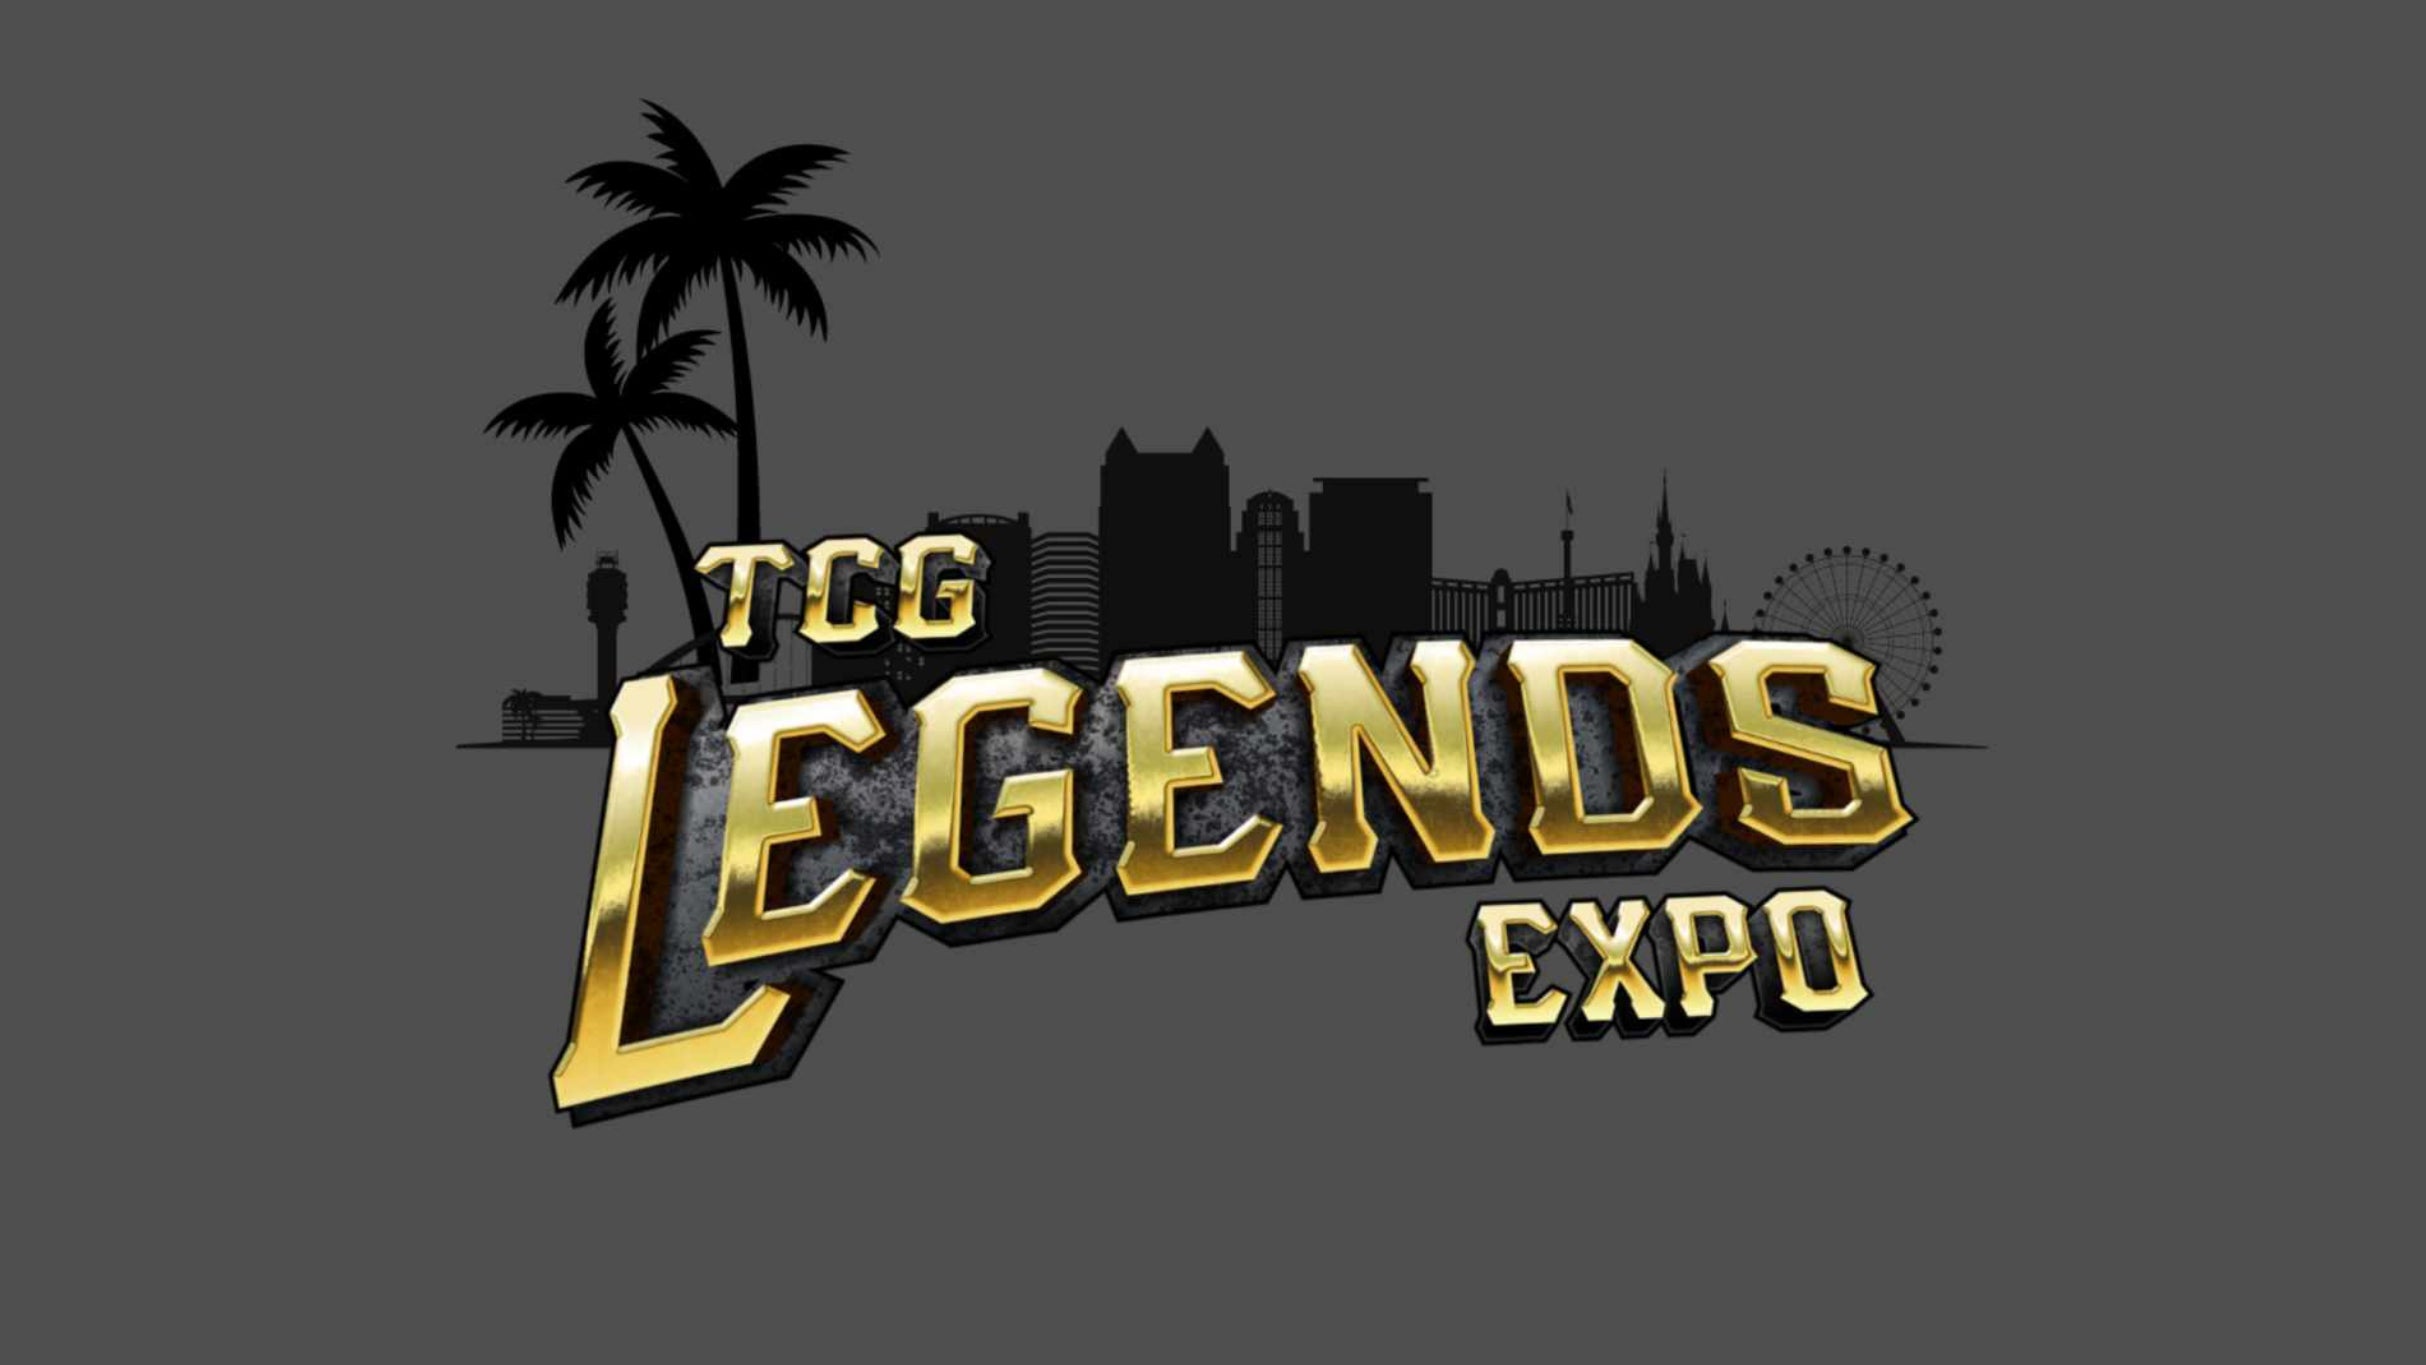 TCG Legends Expo presale information on freepresalepasswords.com